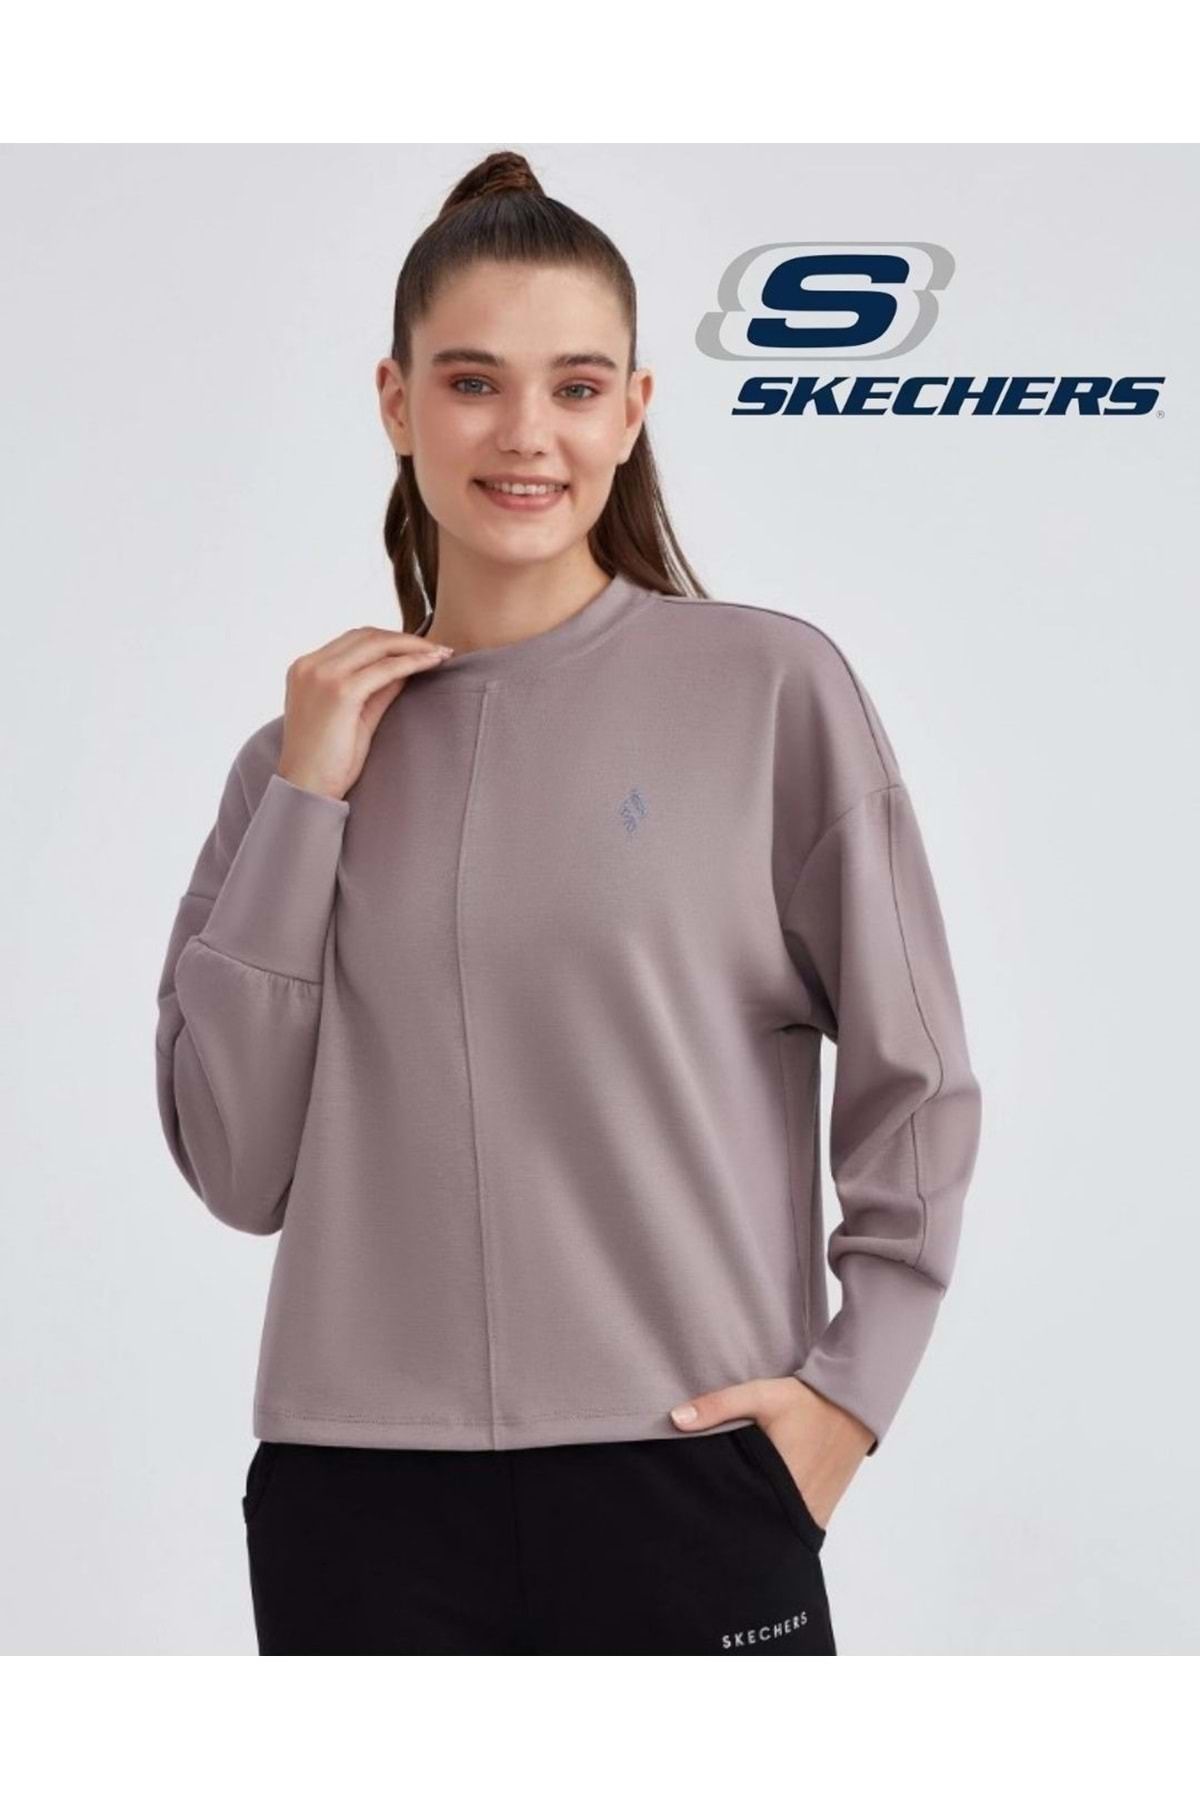 Skechers W Soft Touch Eco Crew Neck Sweatshirt S232181 Kadın Sweatshirt Pembe